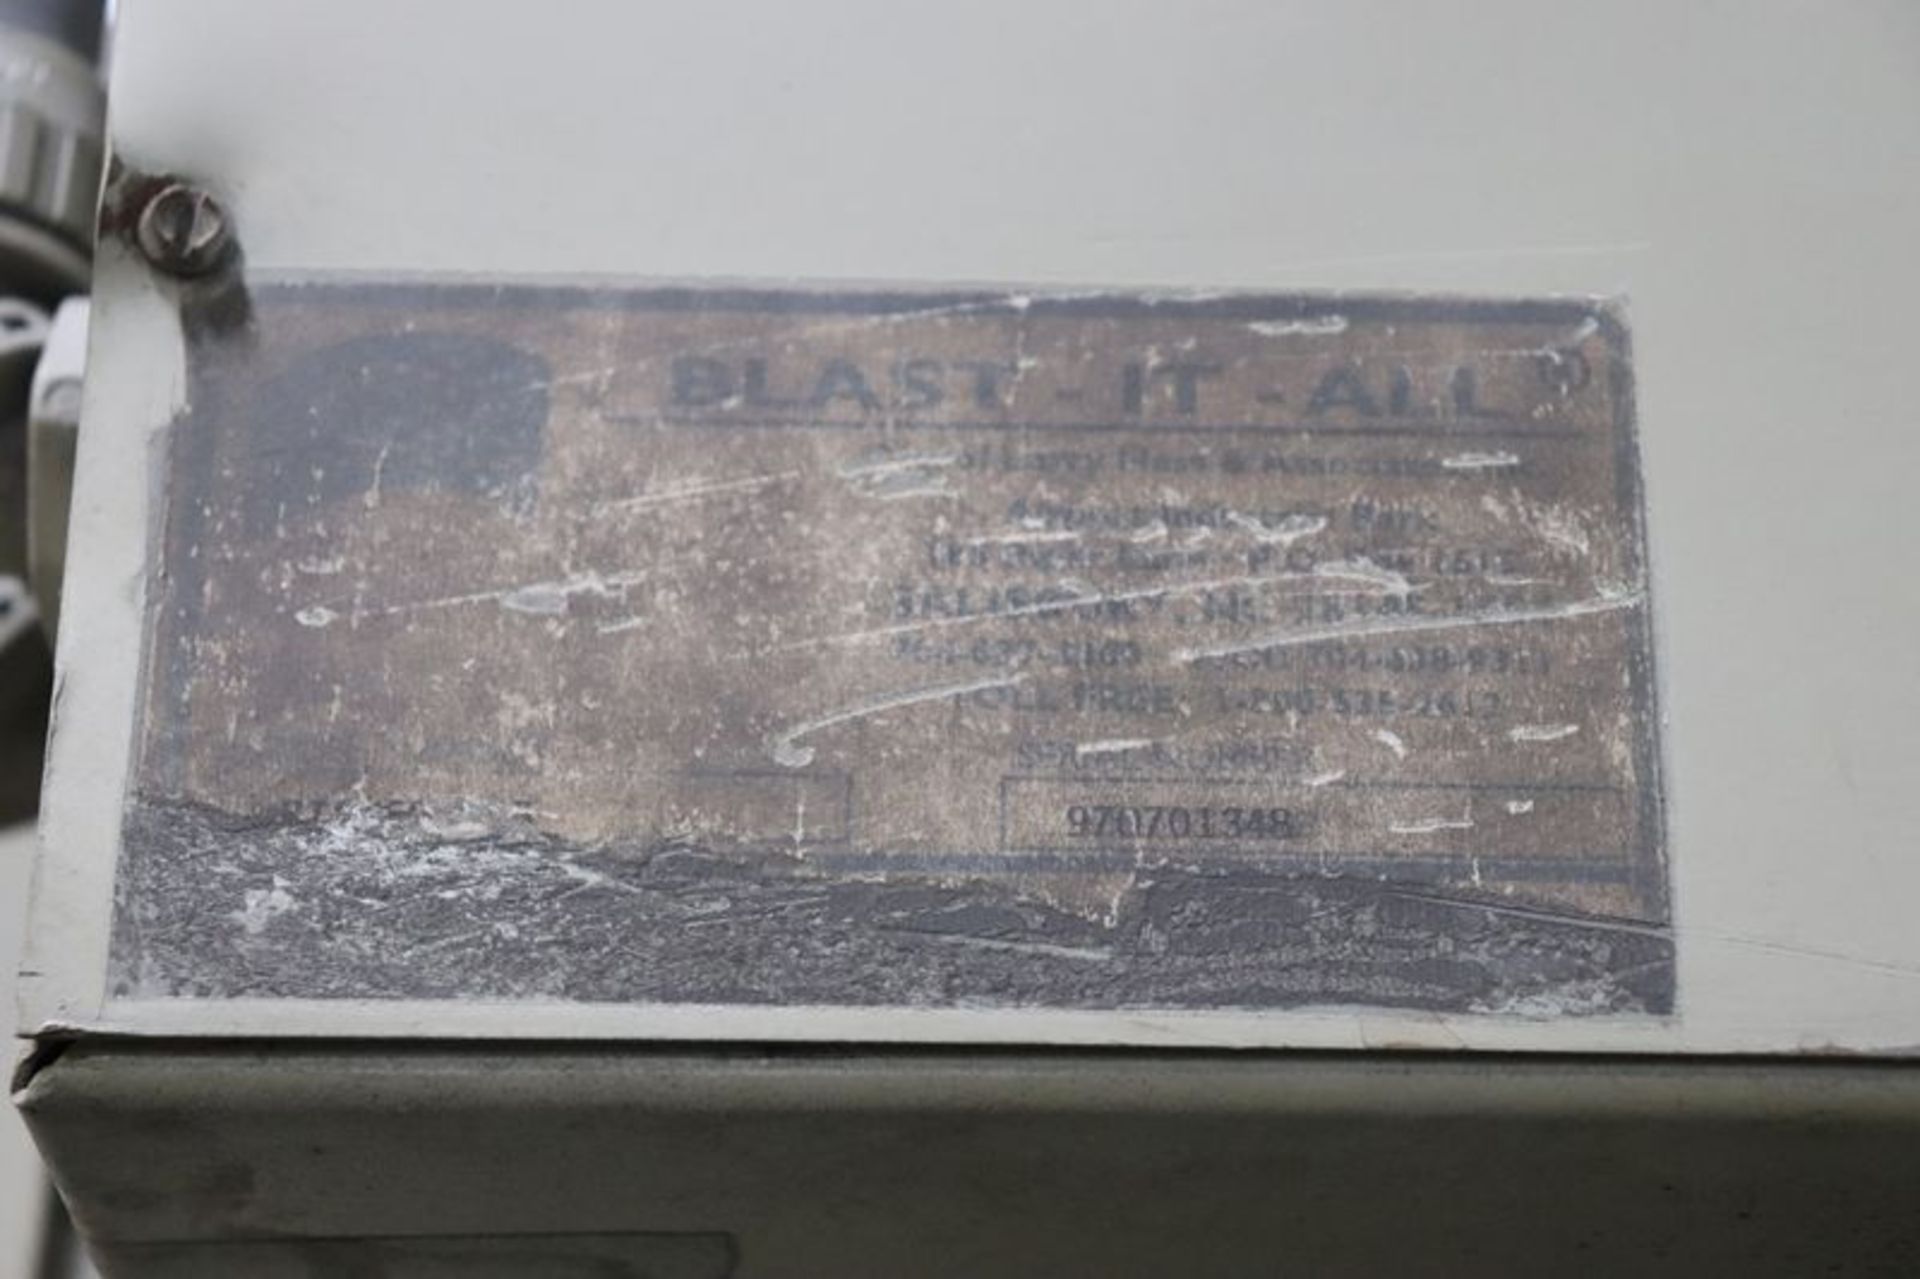 Blast-It-All BIA-3 Turn Table & Track Cube Blast Cabinet - Image 11 of 11